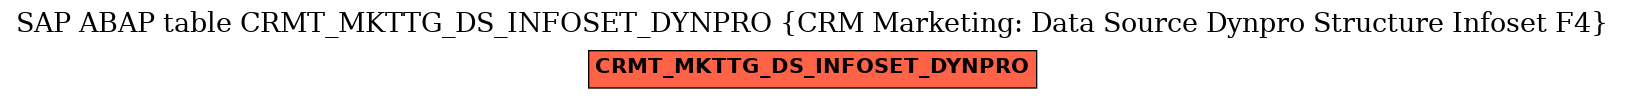 E-R Diagram for table CRMT_MKTTG_DS_INFOSET_DYNPRO (CRM Marketing: Data Source Dynpro Structure Infoset F4)